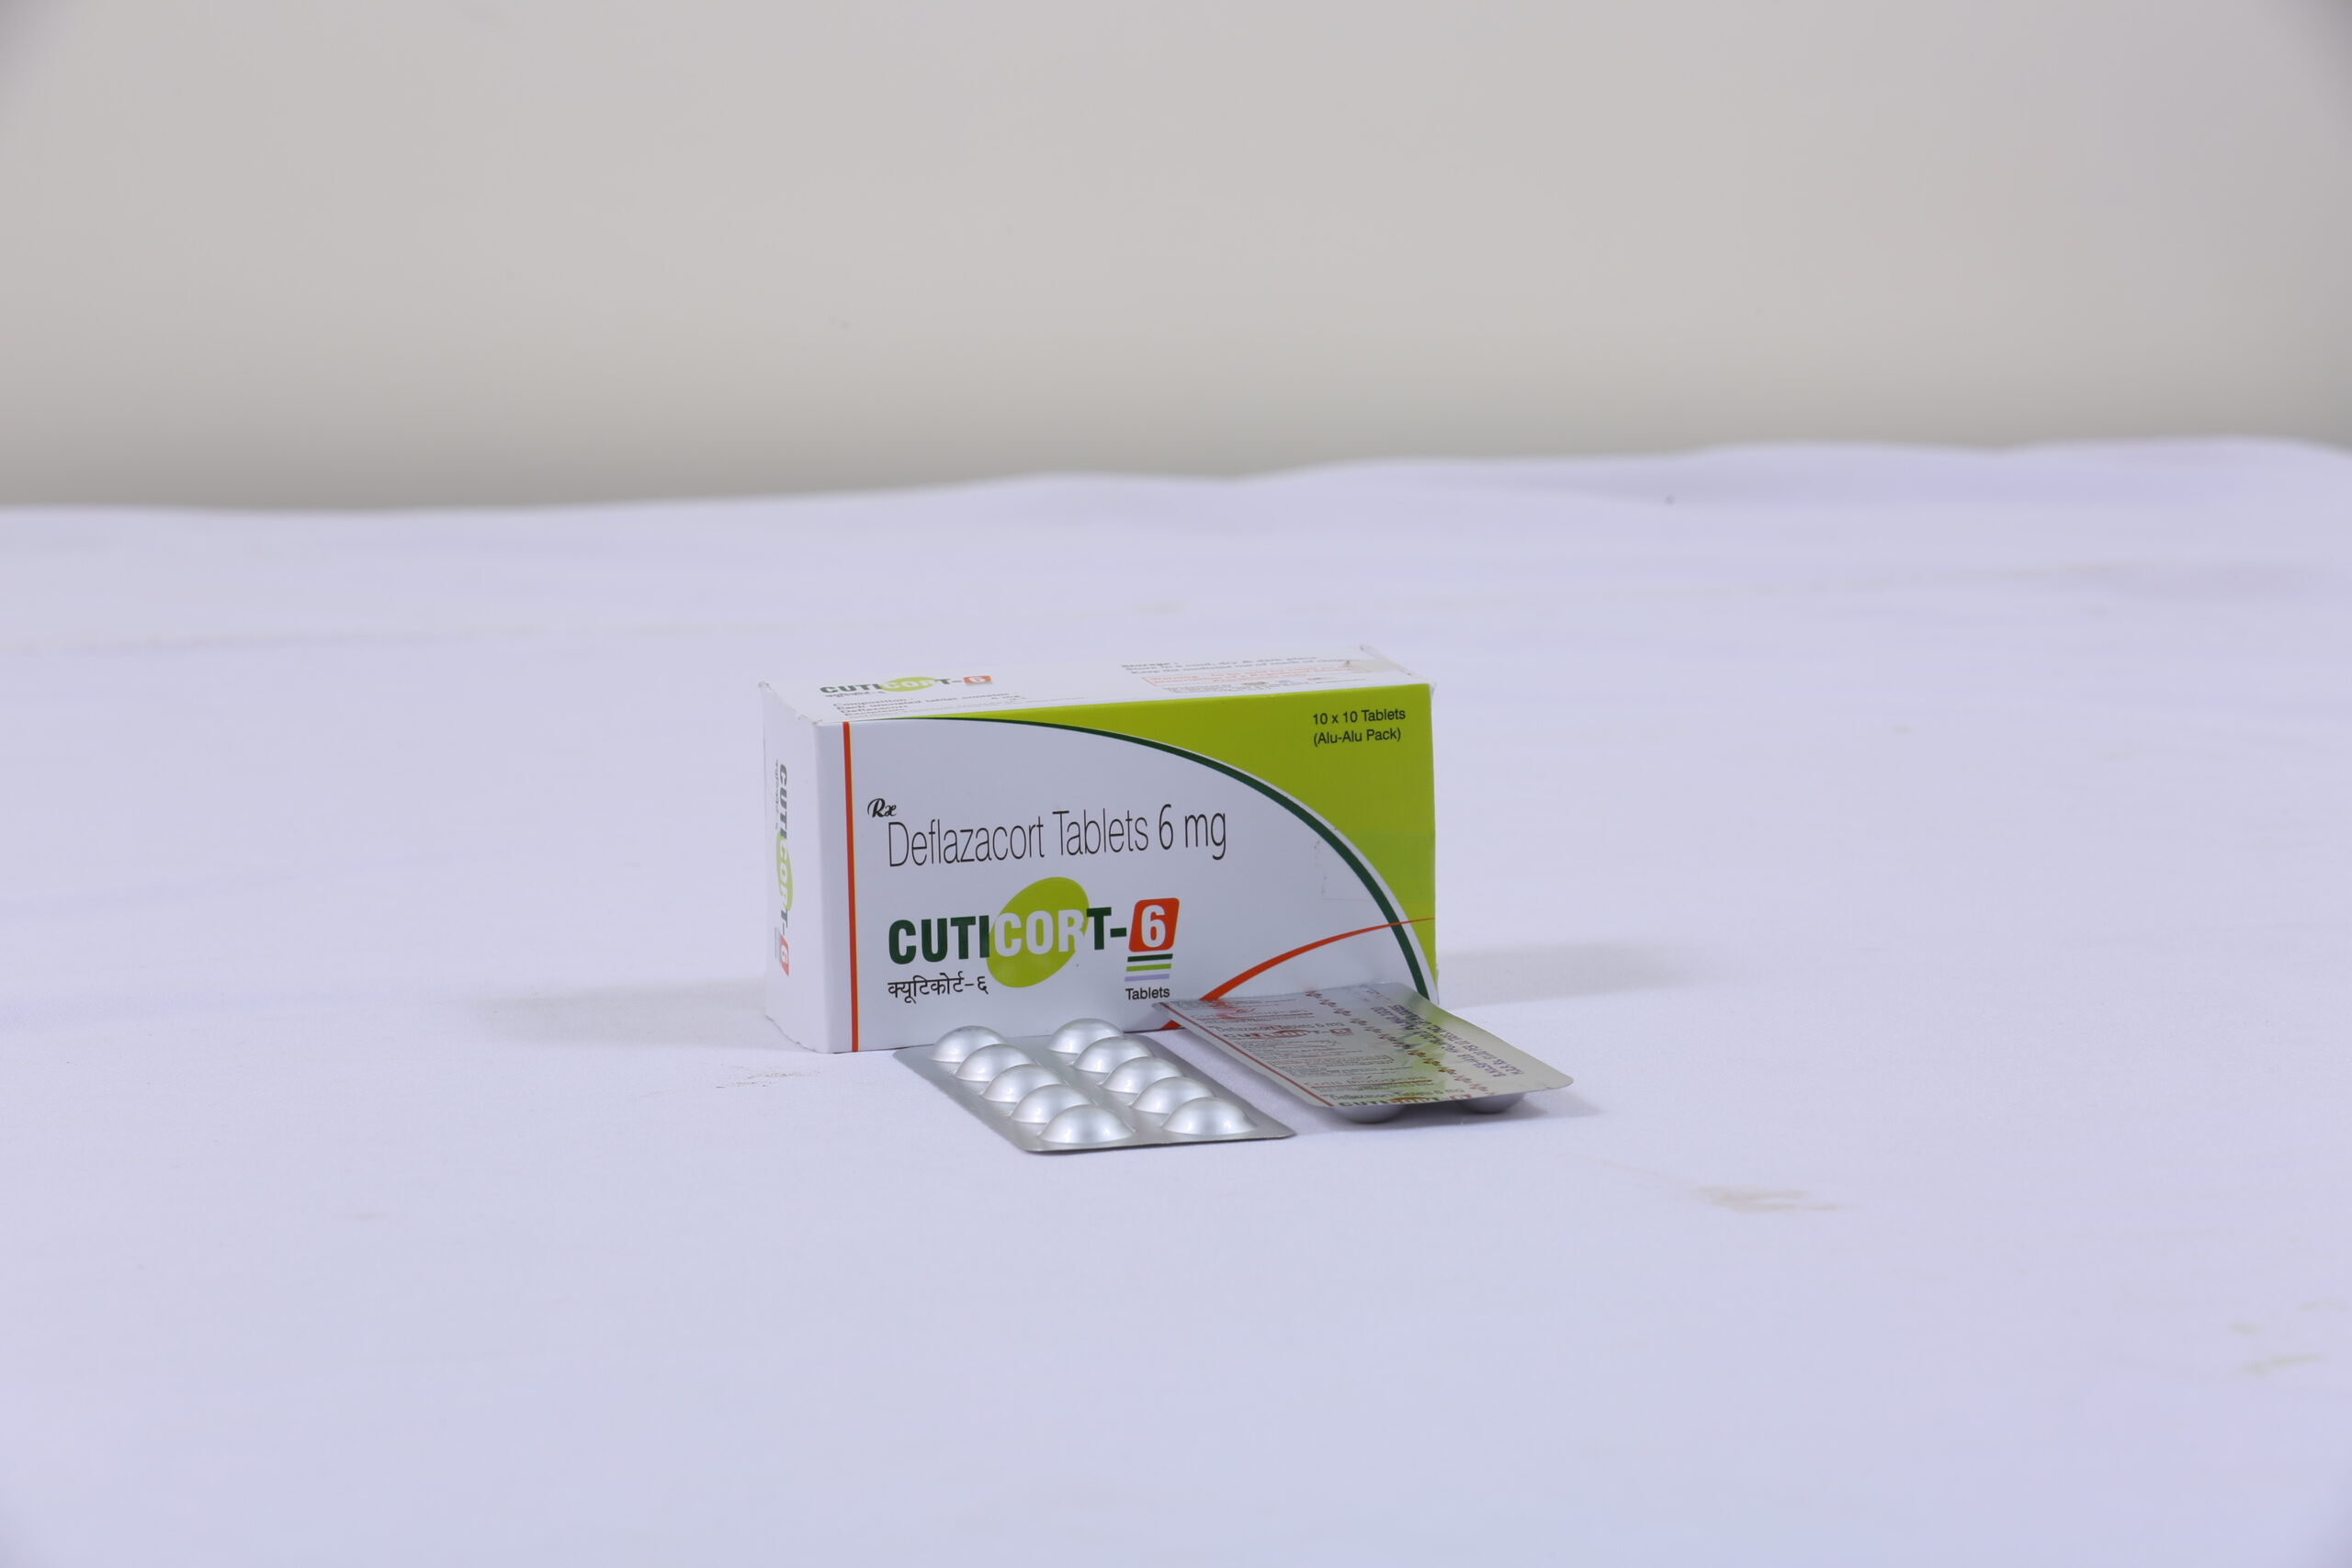 CUTICORT-6 (Deflazacort 6 mg)